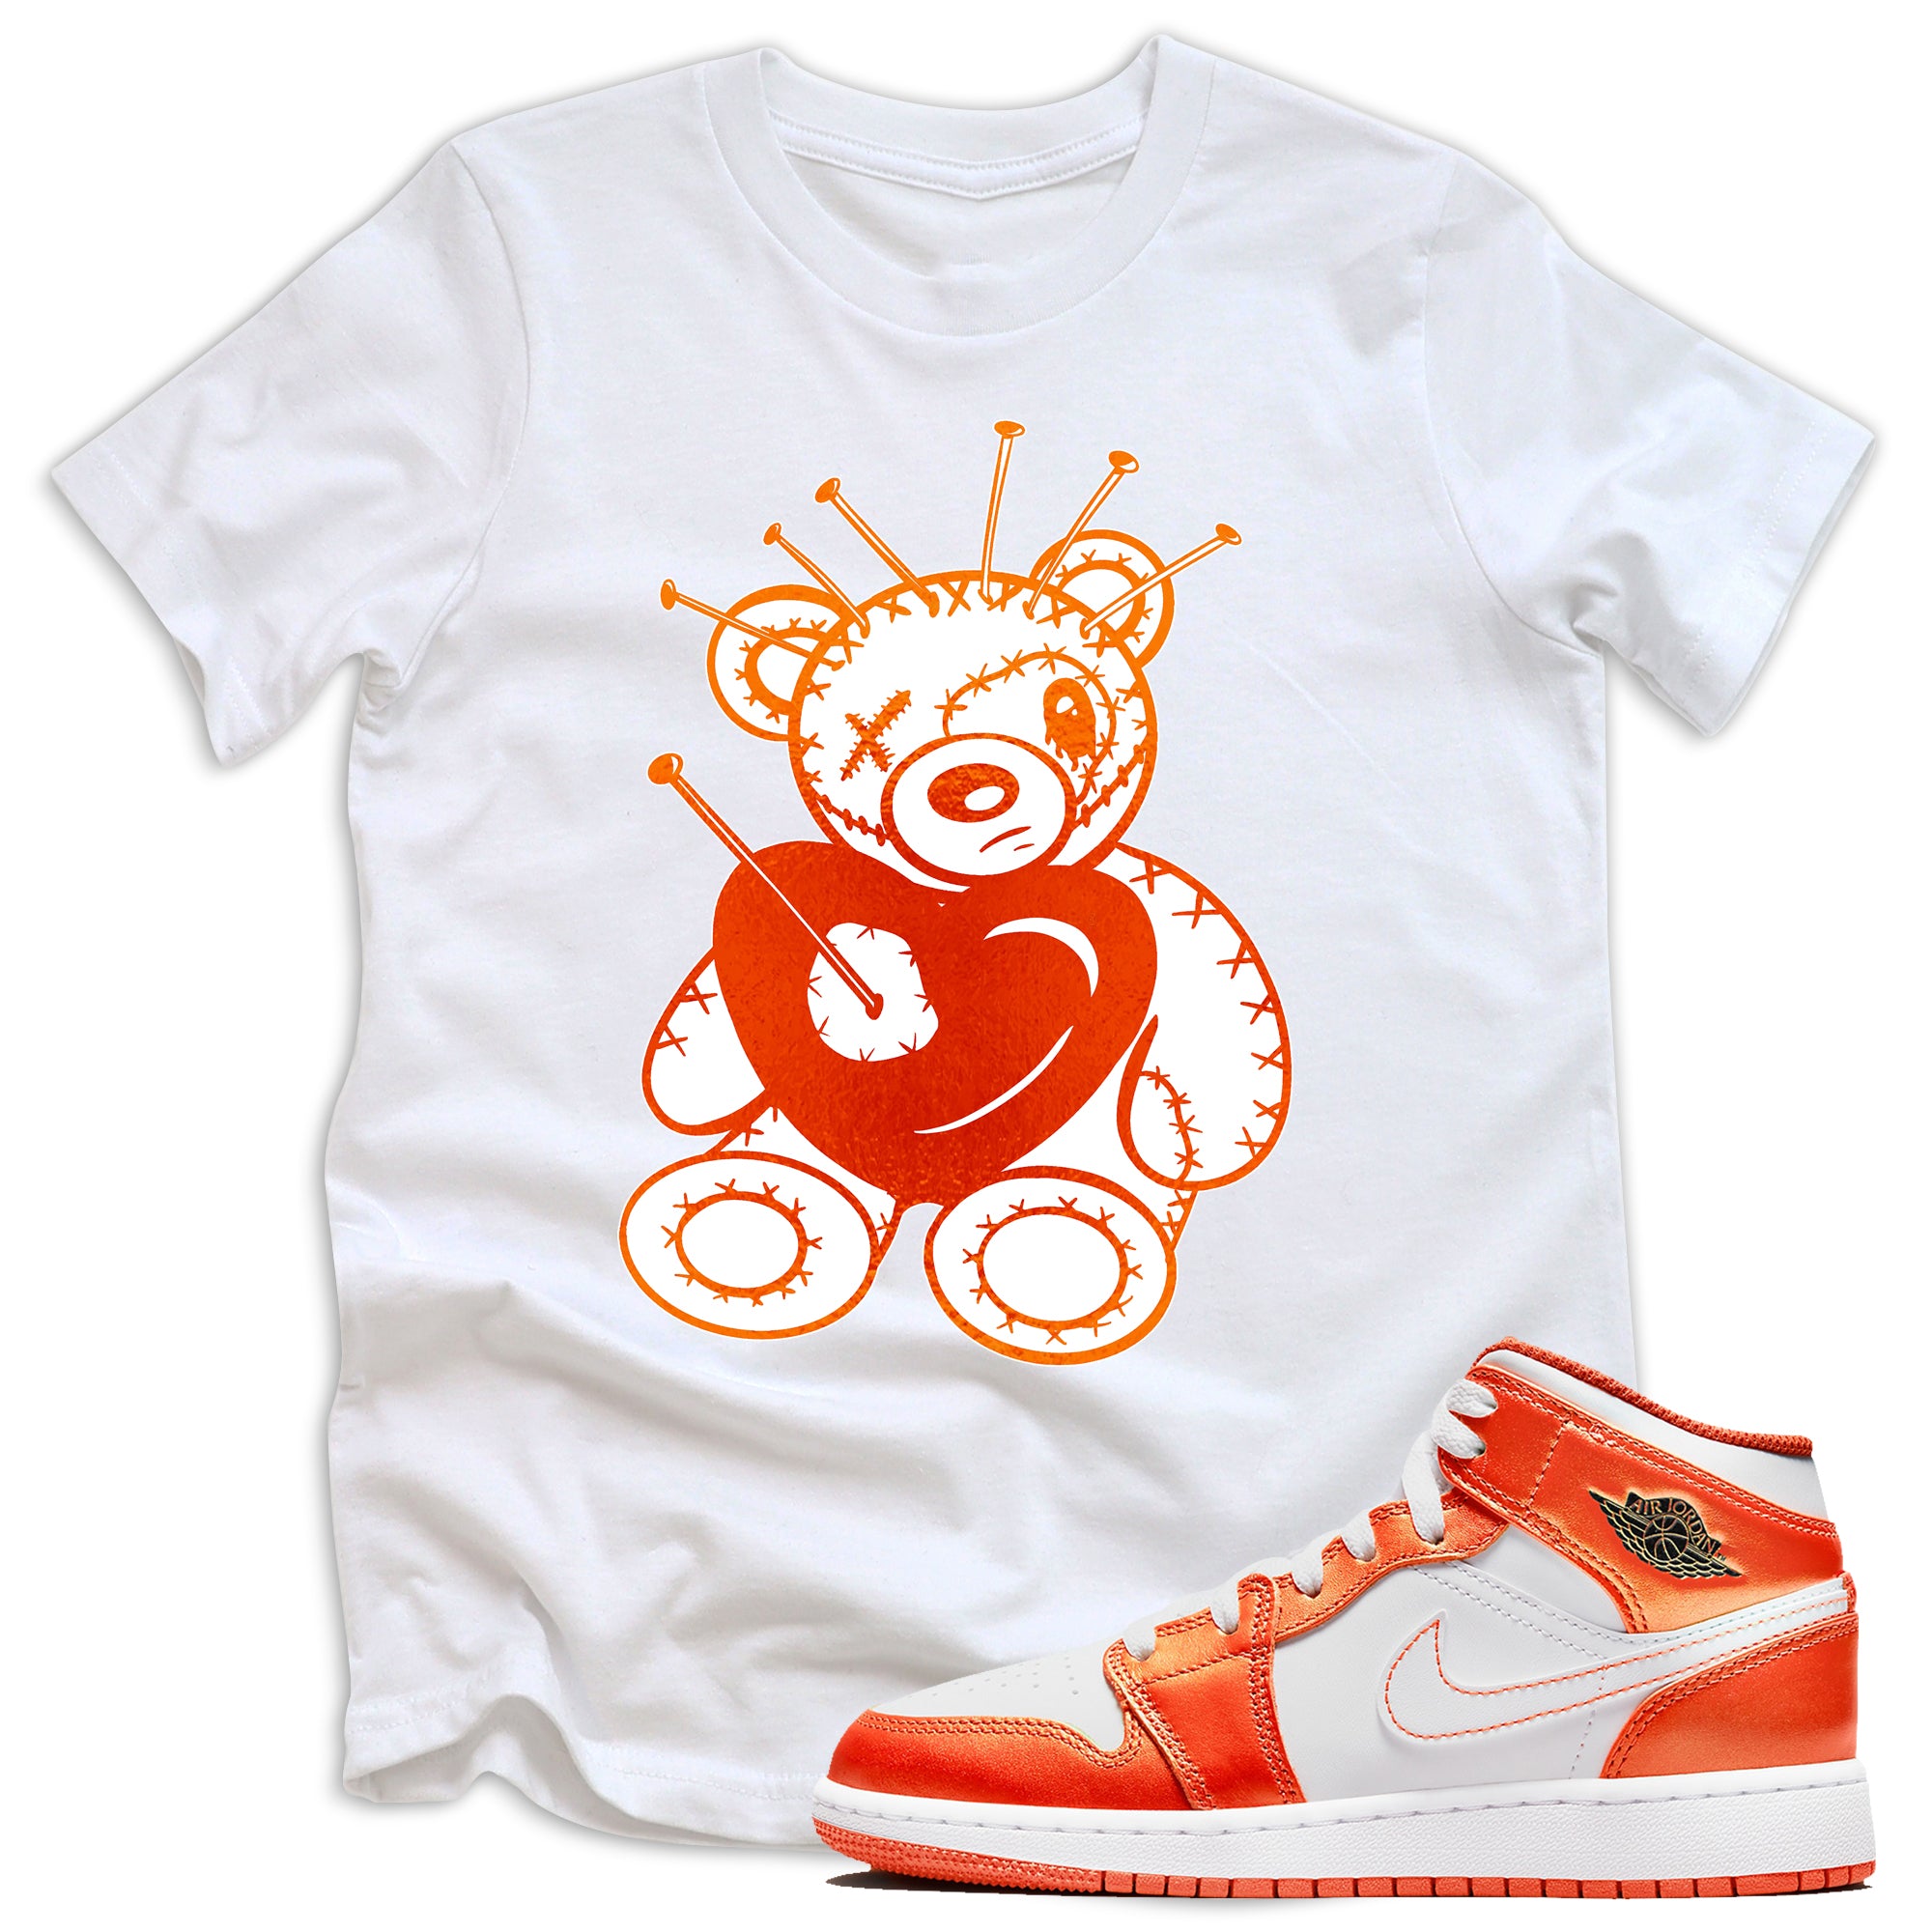 Voodoo Teddy Shirt Jordan 1s Mid Metallic Orange photo